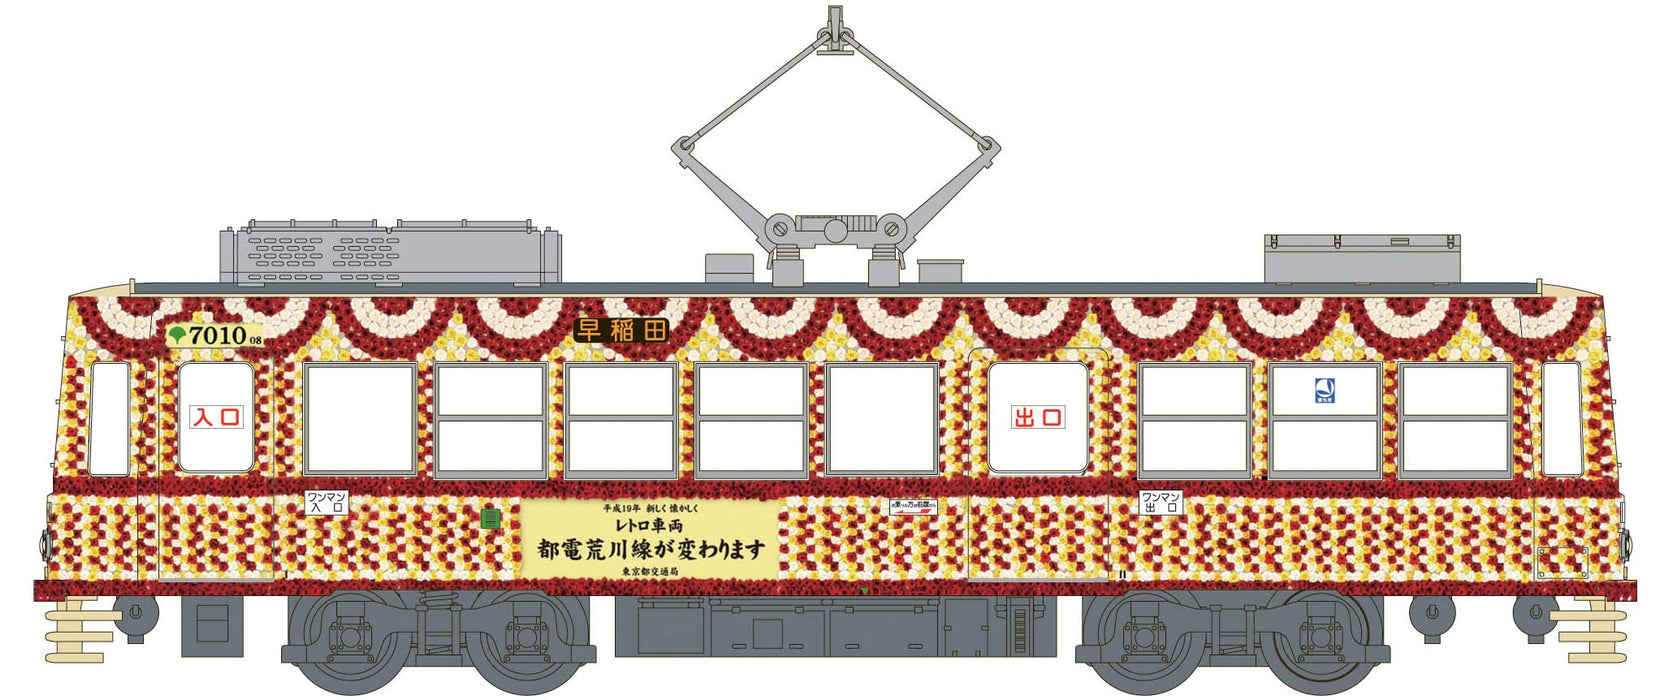 MODEMO Nt173 Tokyo Metropolitan Tram Type 7000 Mise à jour '7010 Flower Train' N Scale